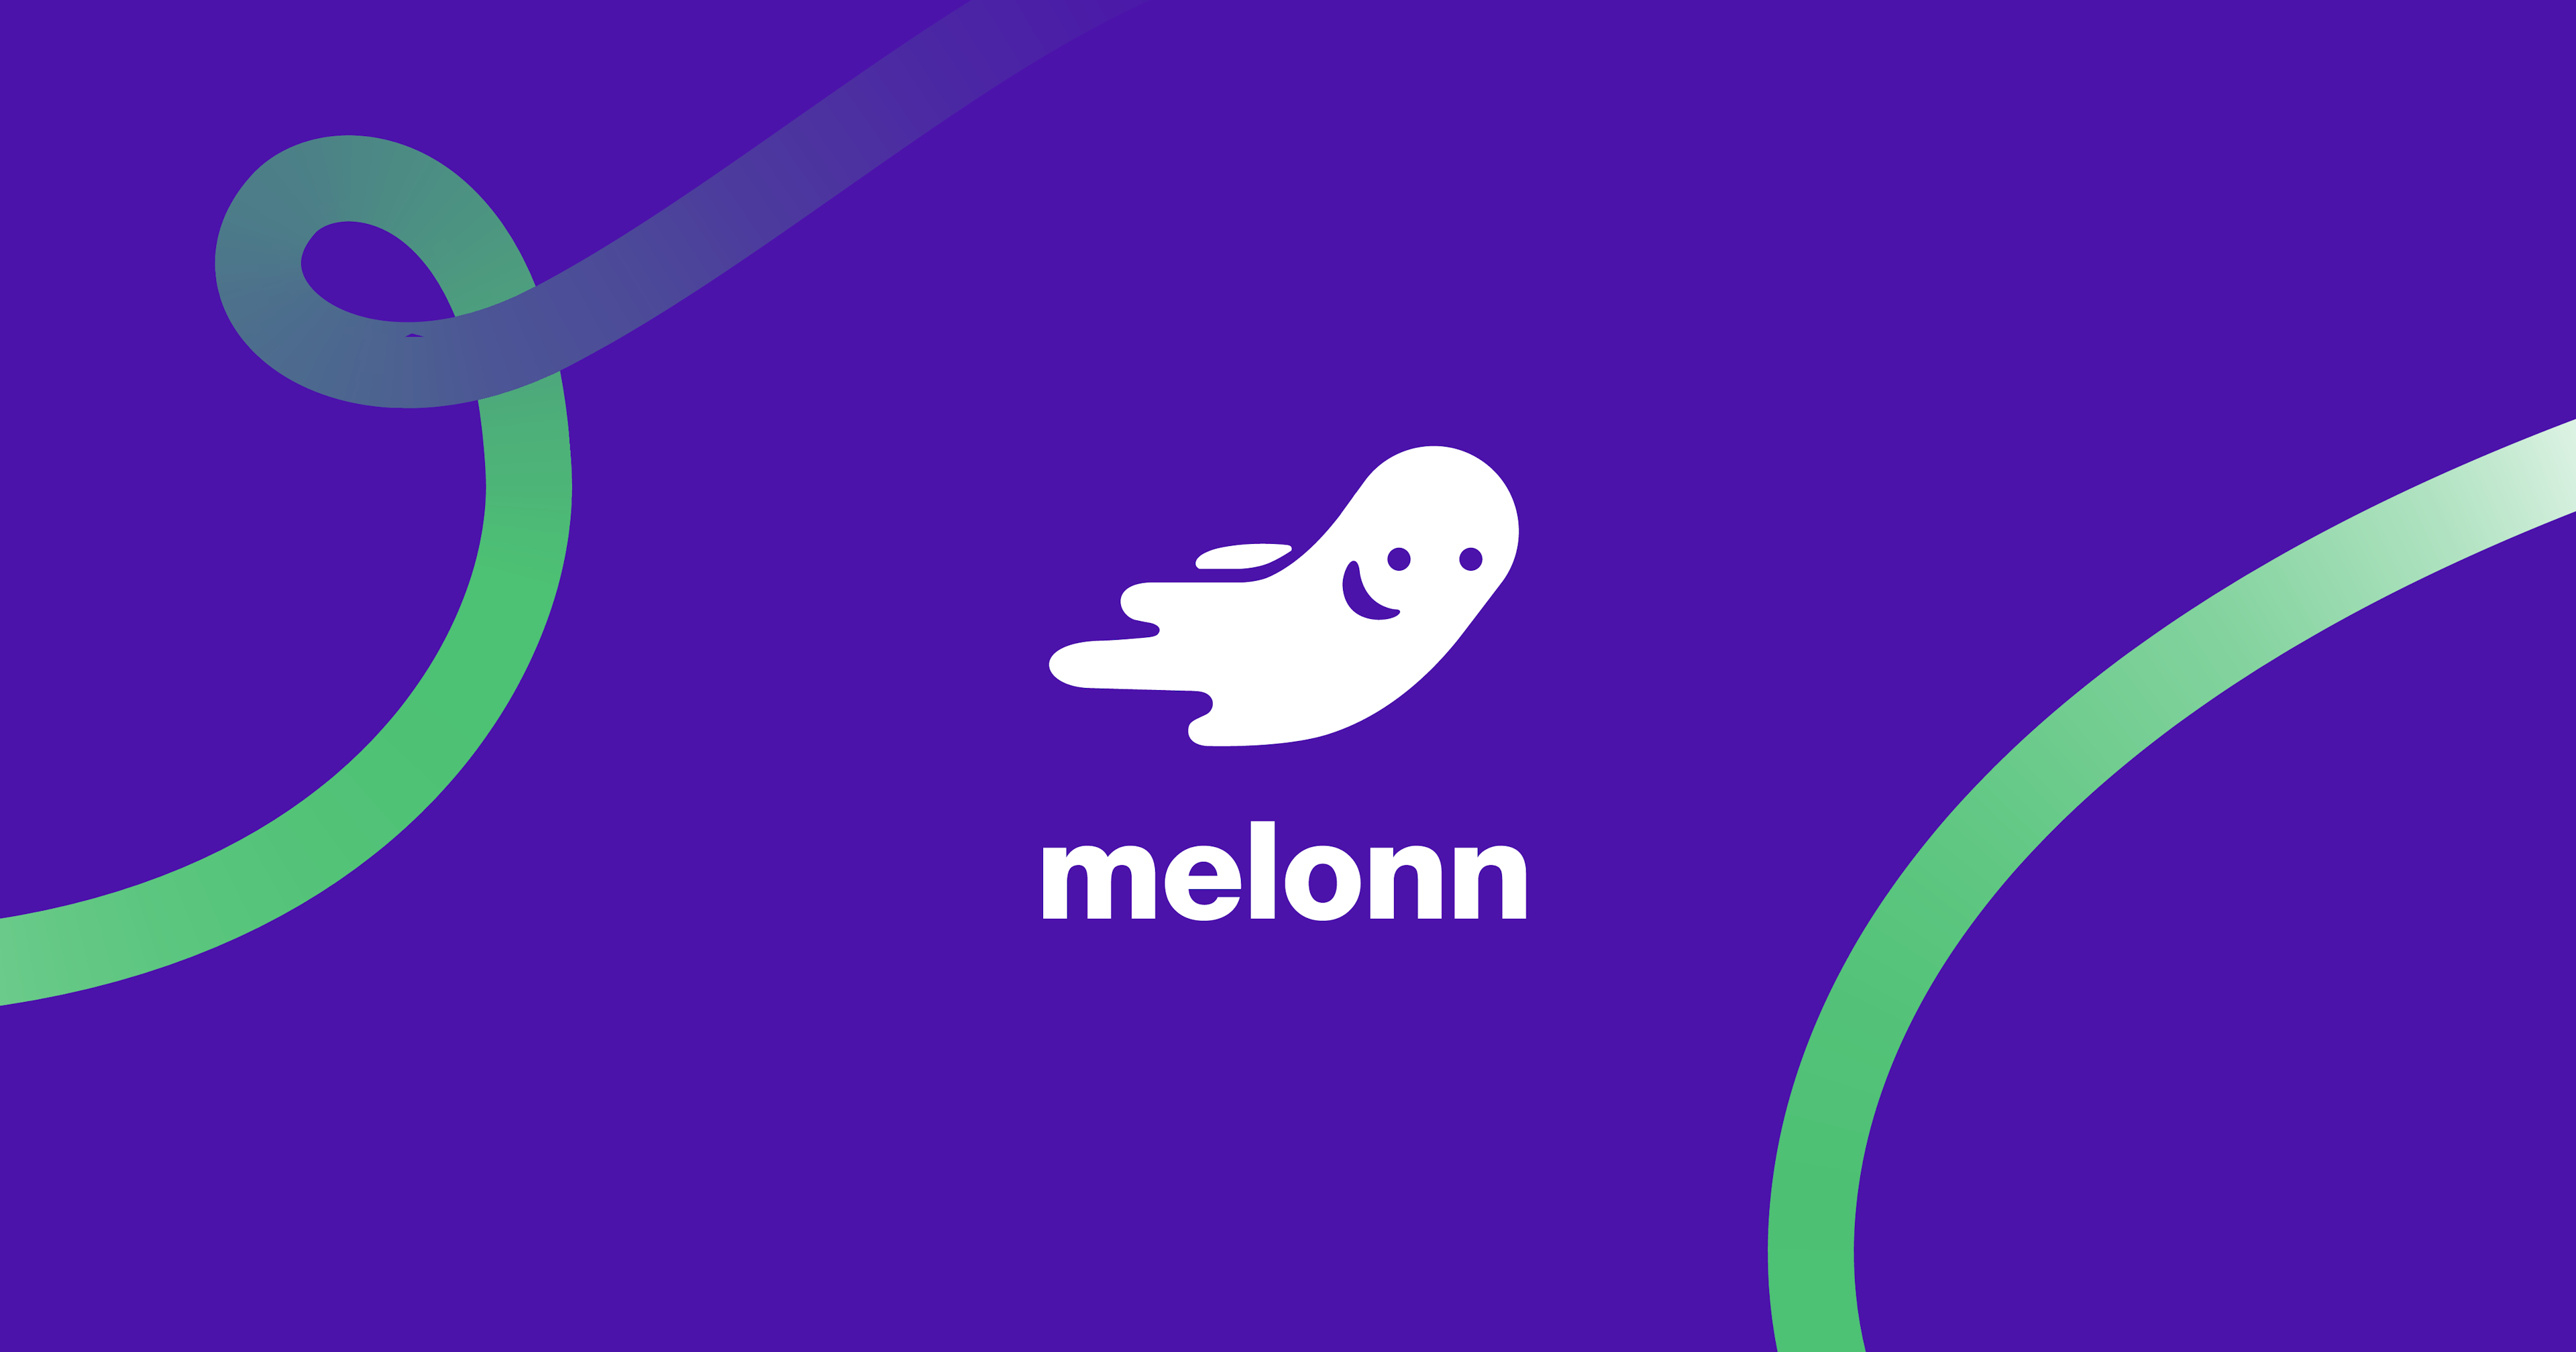 Melonn logo